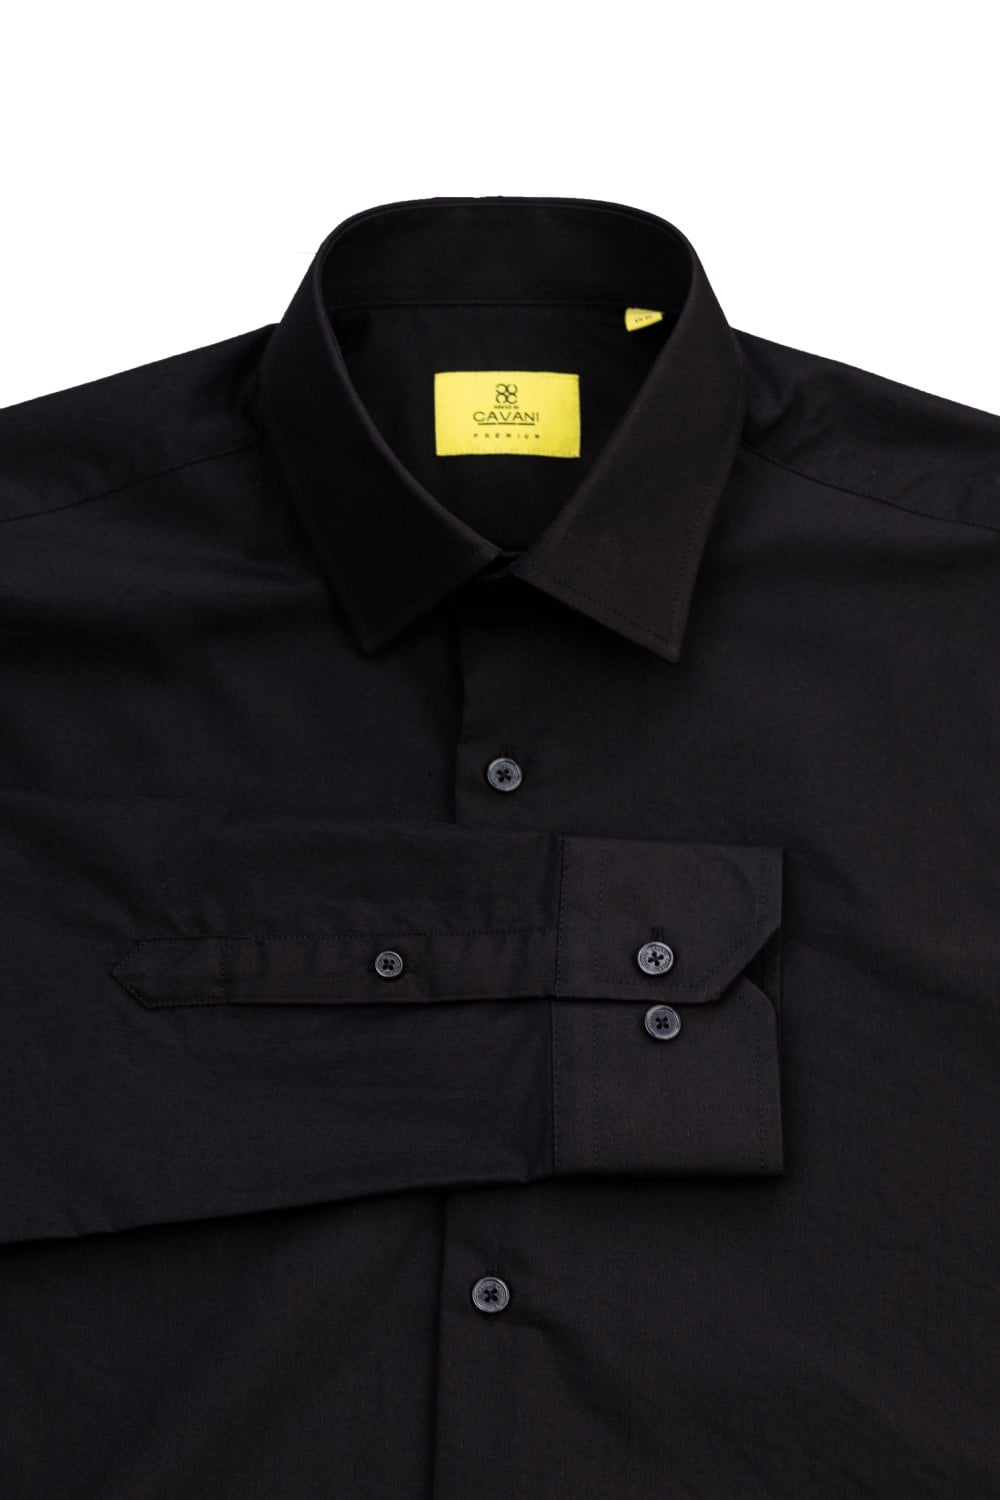 Miatti Black Long Sleeve Shirt - OOS 28/7/23 - Shirts - 14.5" - THREADPEPPER